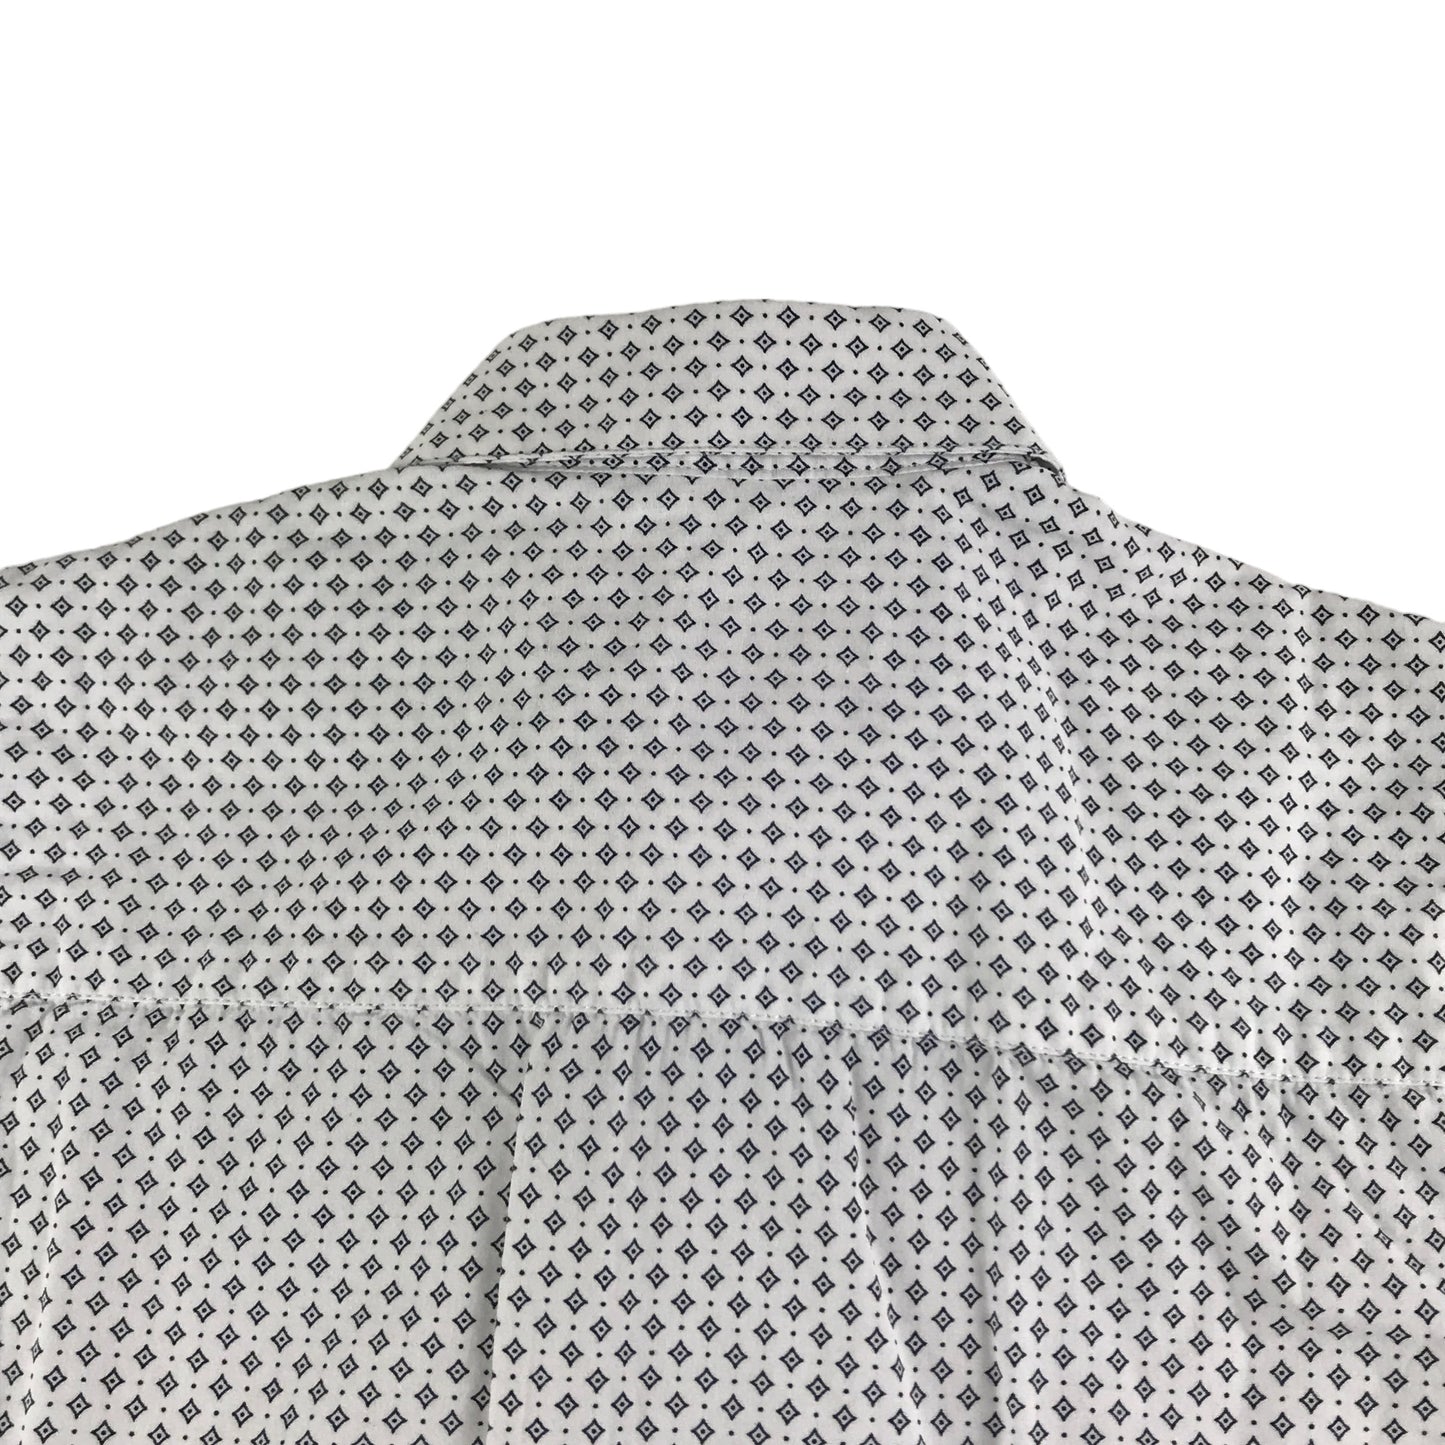 Next Shirt Age 10 White Diamond Pattern Short Sleeve Button Up Cotton